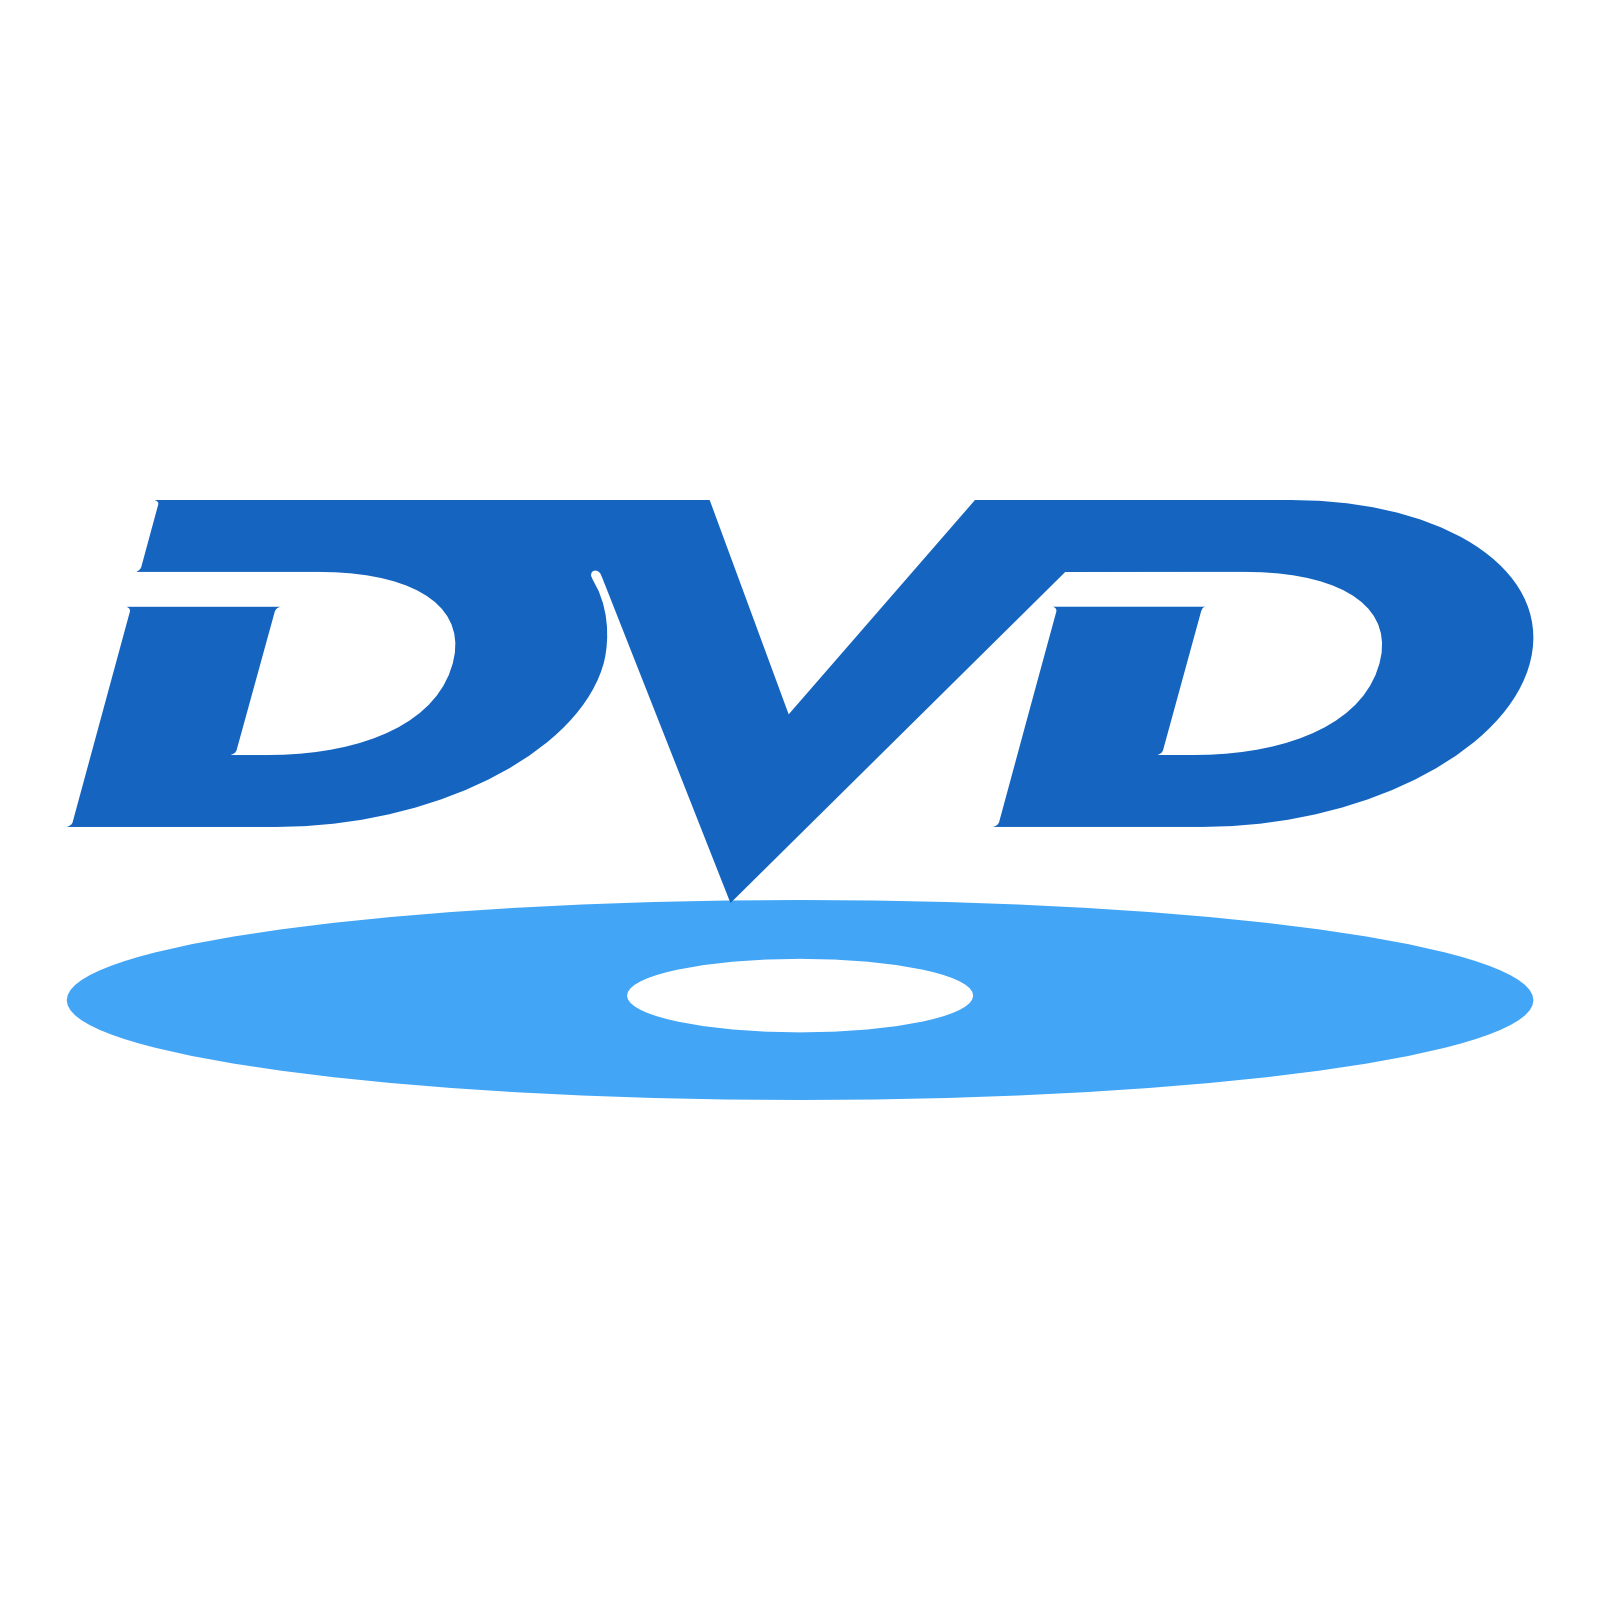 DVD Logo Icon - Free Download at Icons8